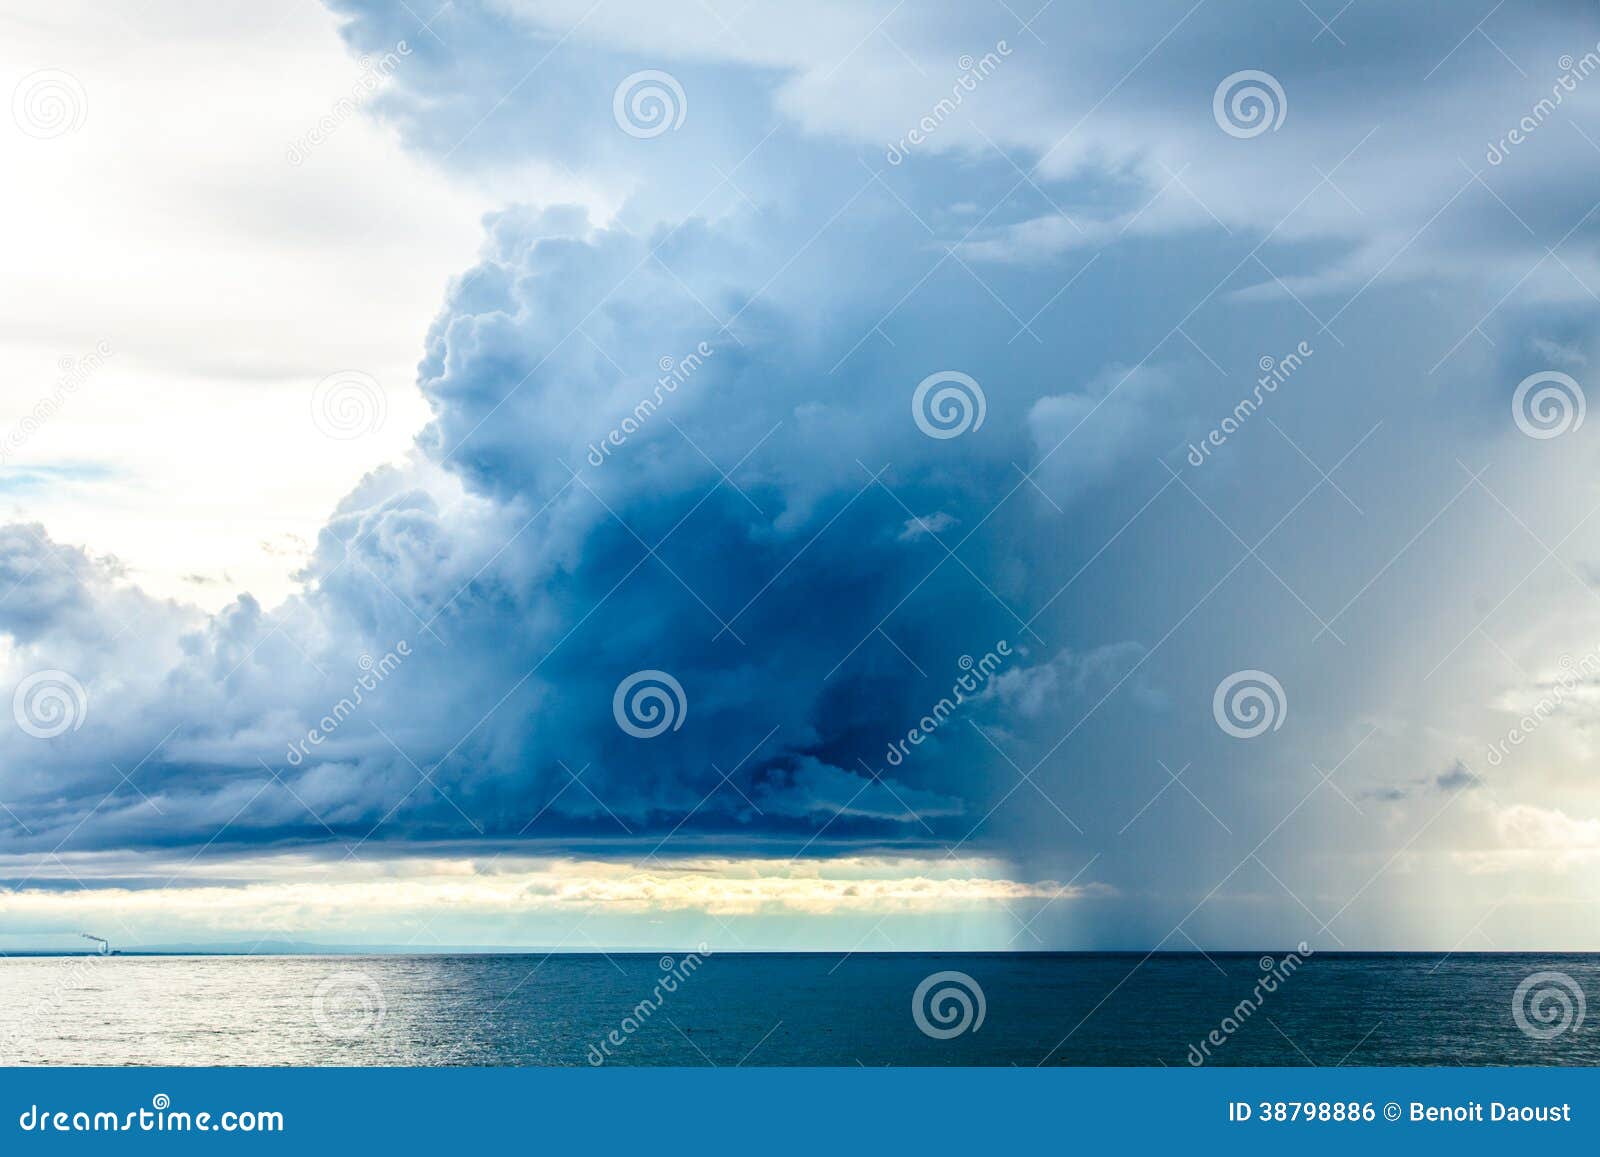 rain clouds at the sea horizon